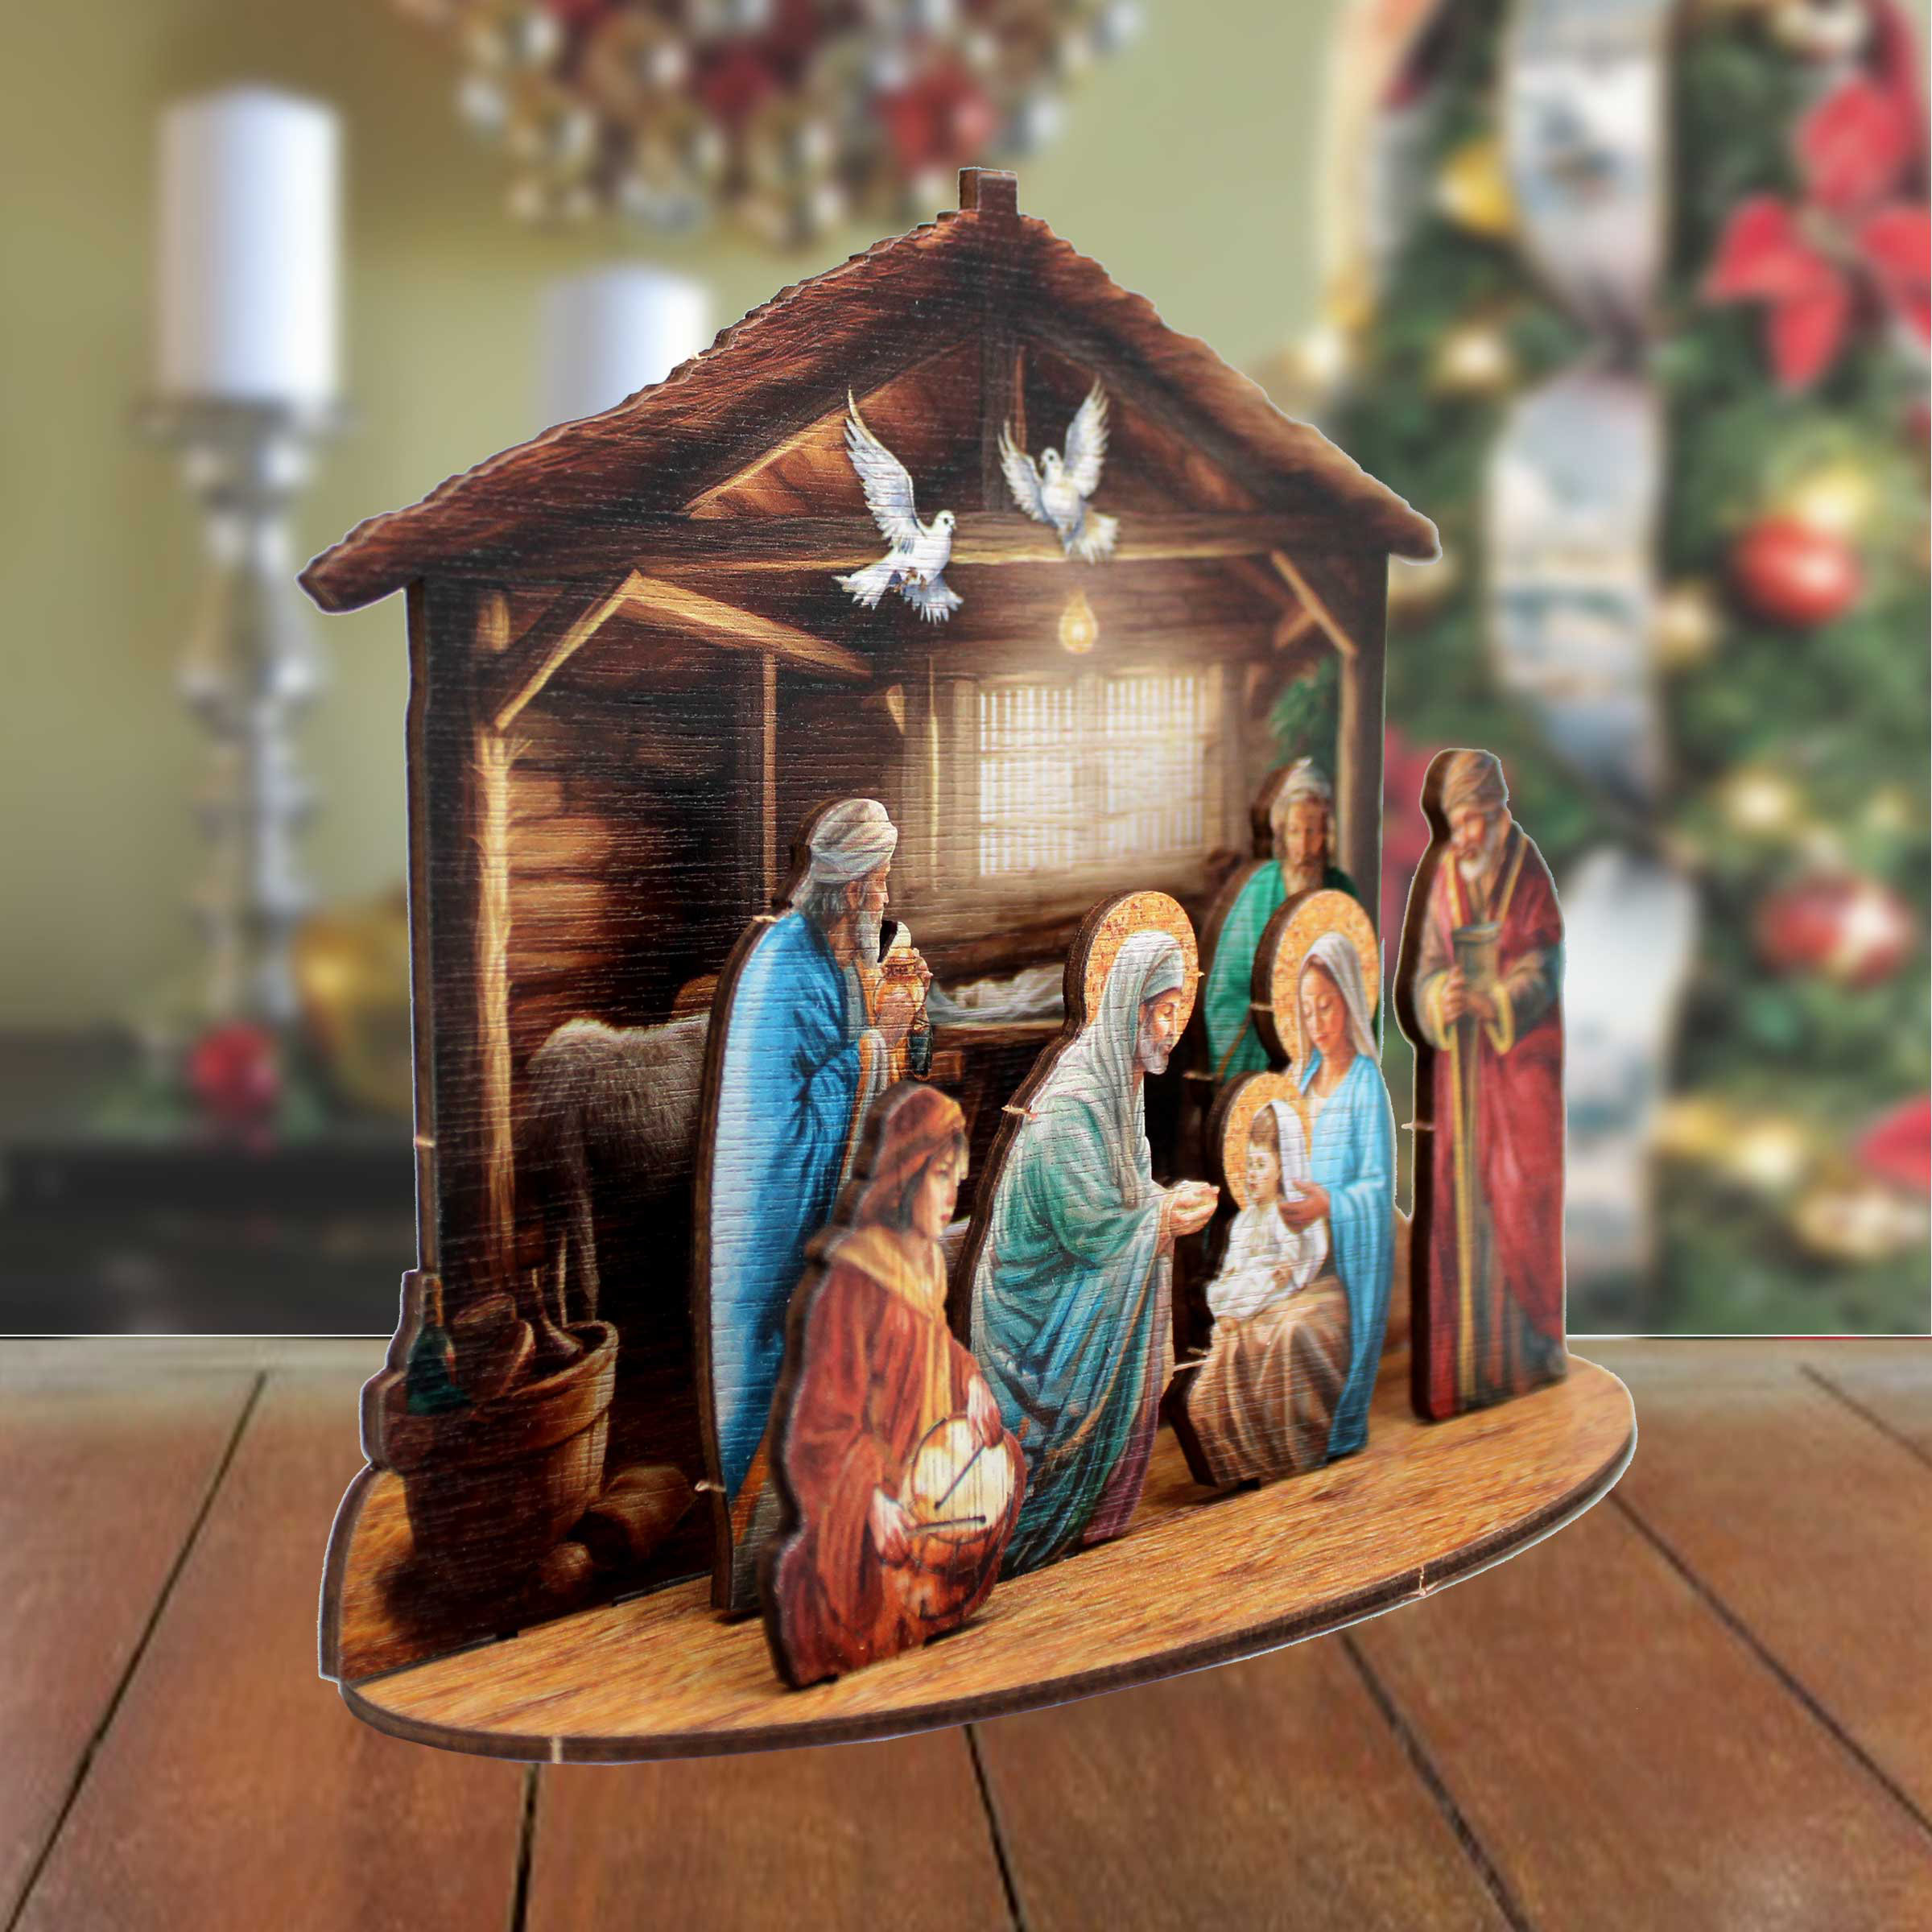 Nativity Scene Stocking The Holiday Aisle